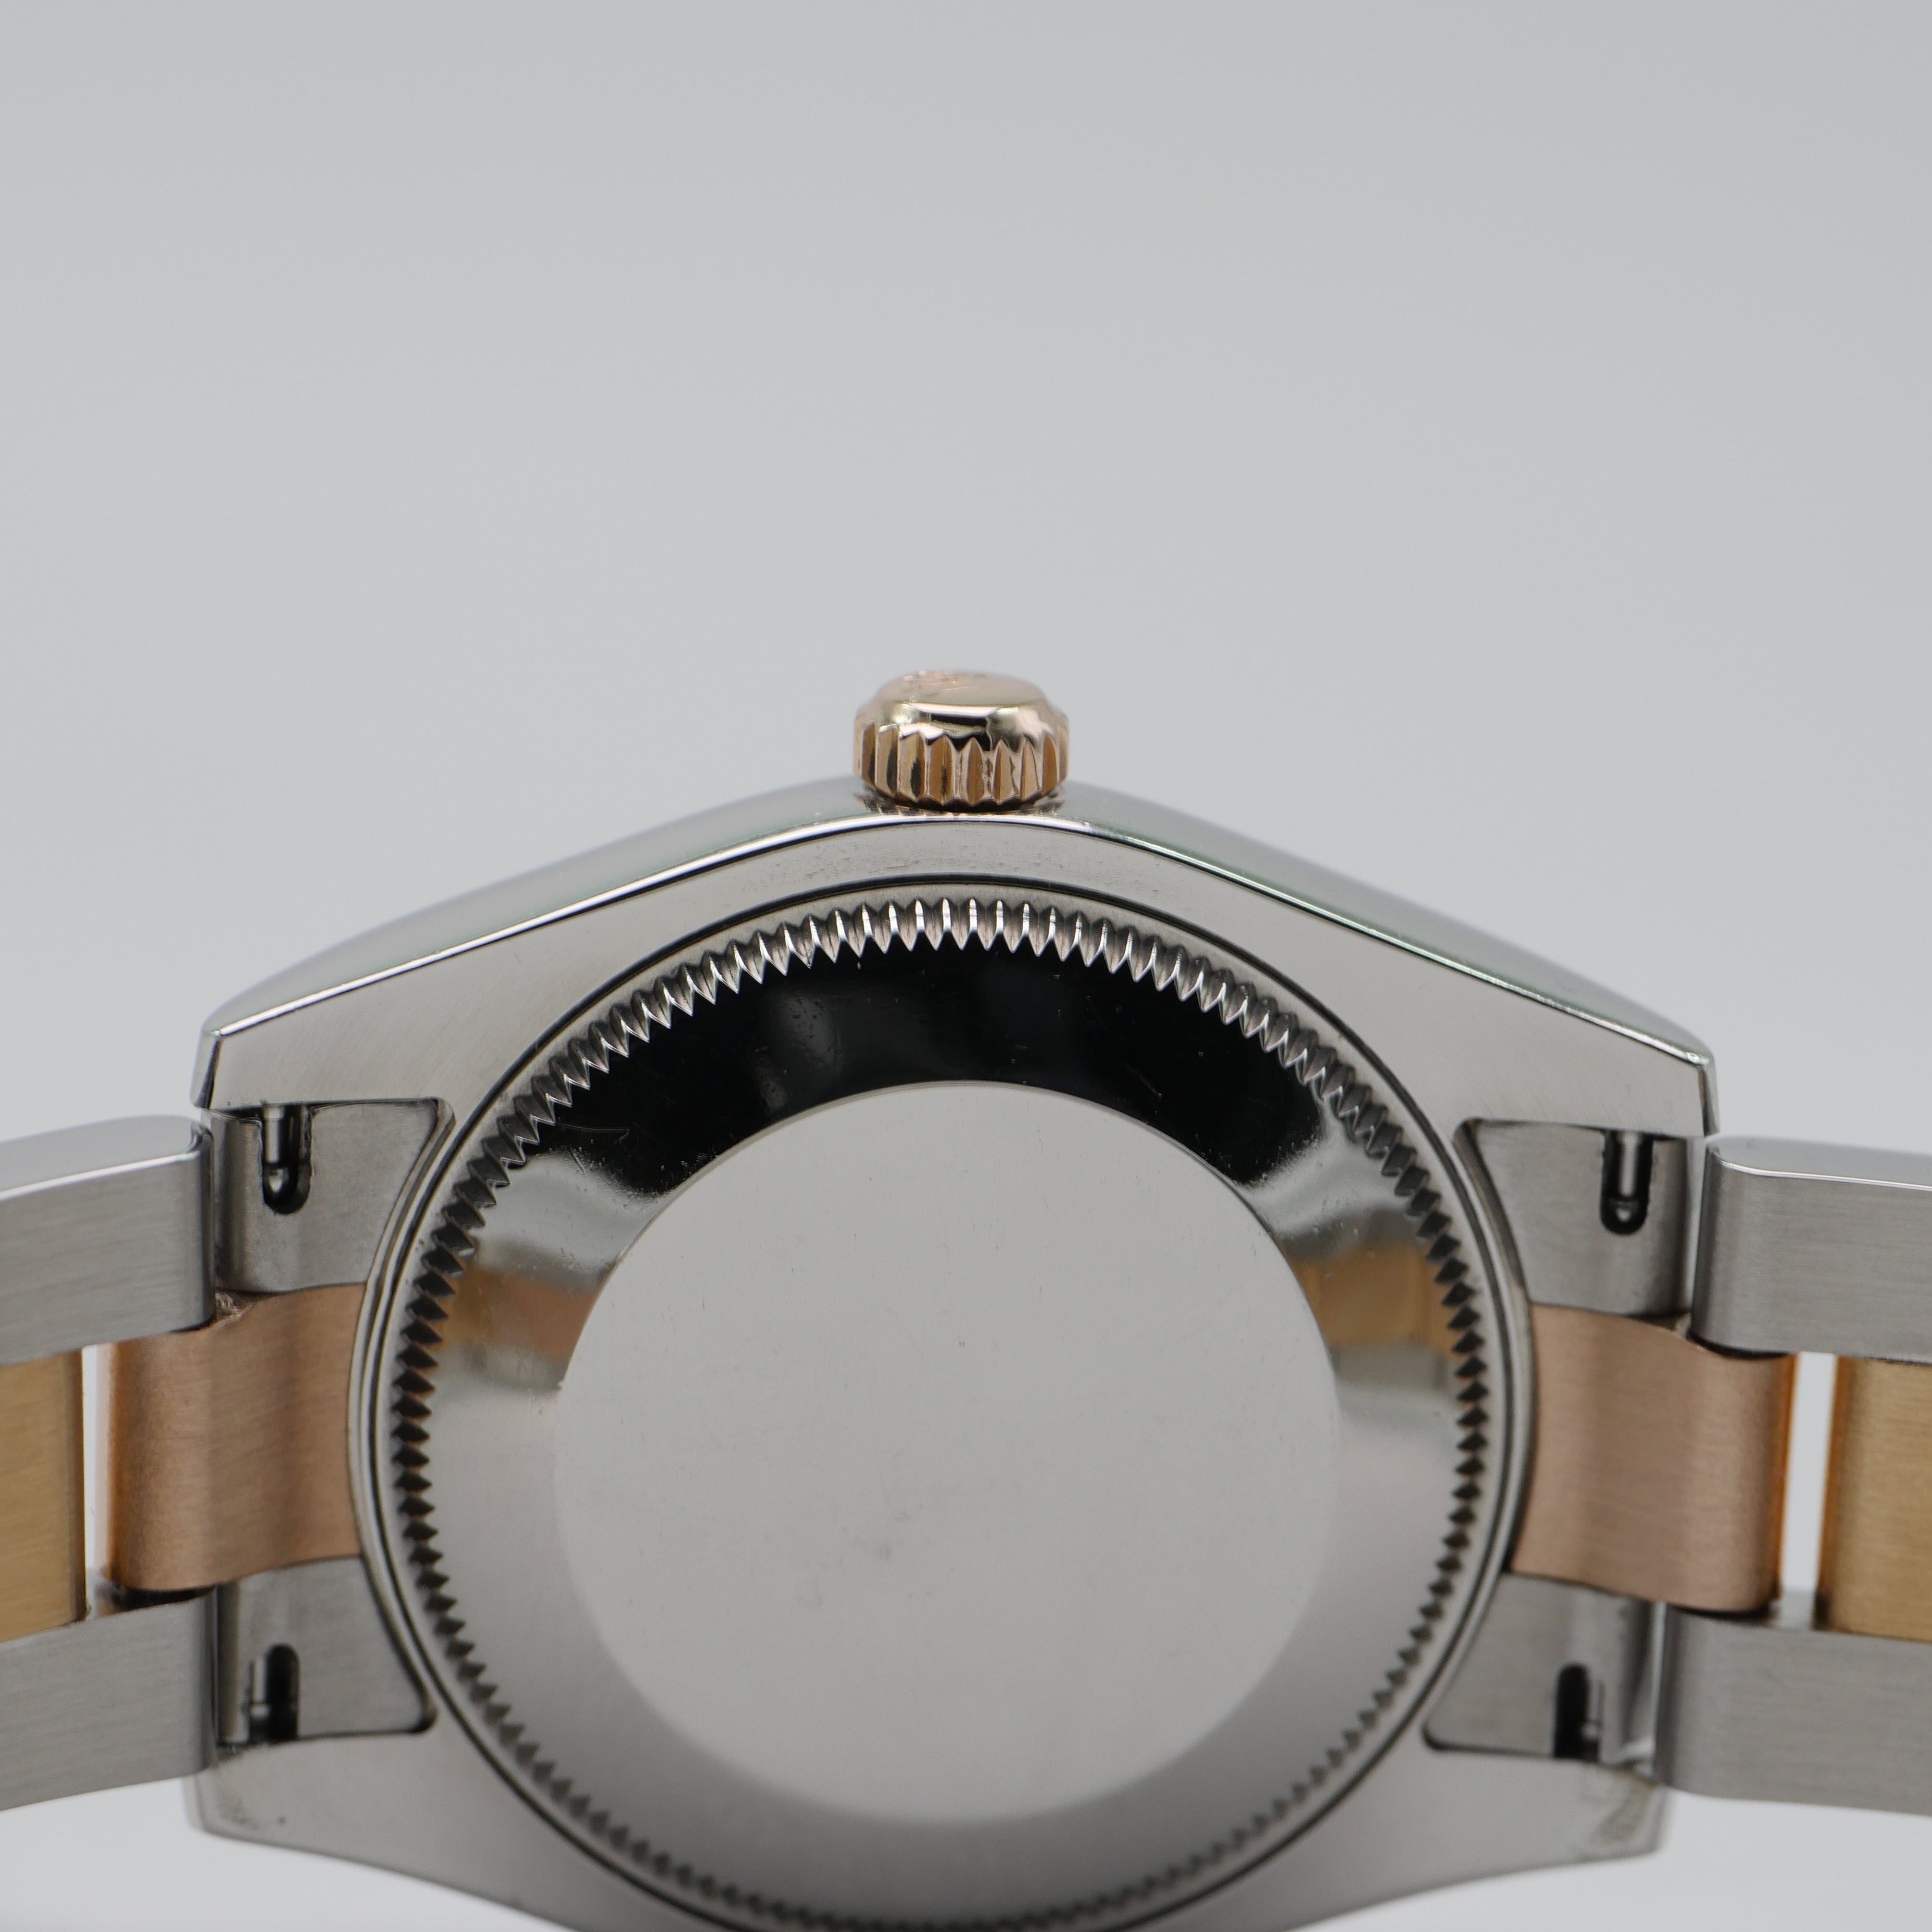 Rolex Datejust 31mm Stahl / Roségold 178241 - 2010